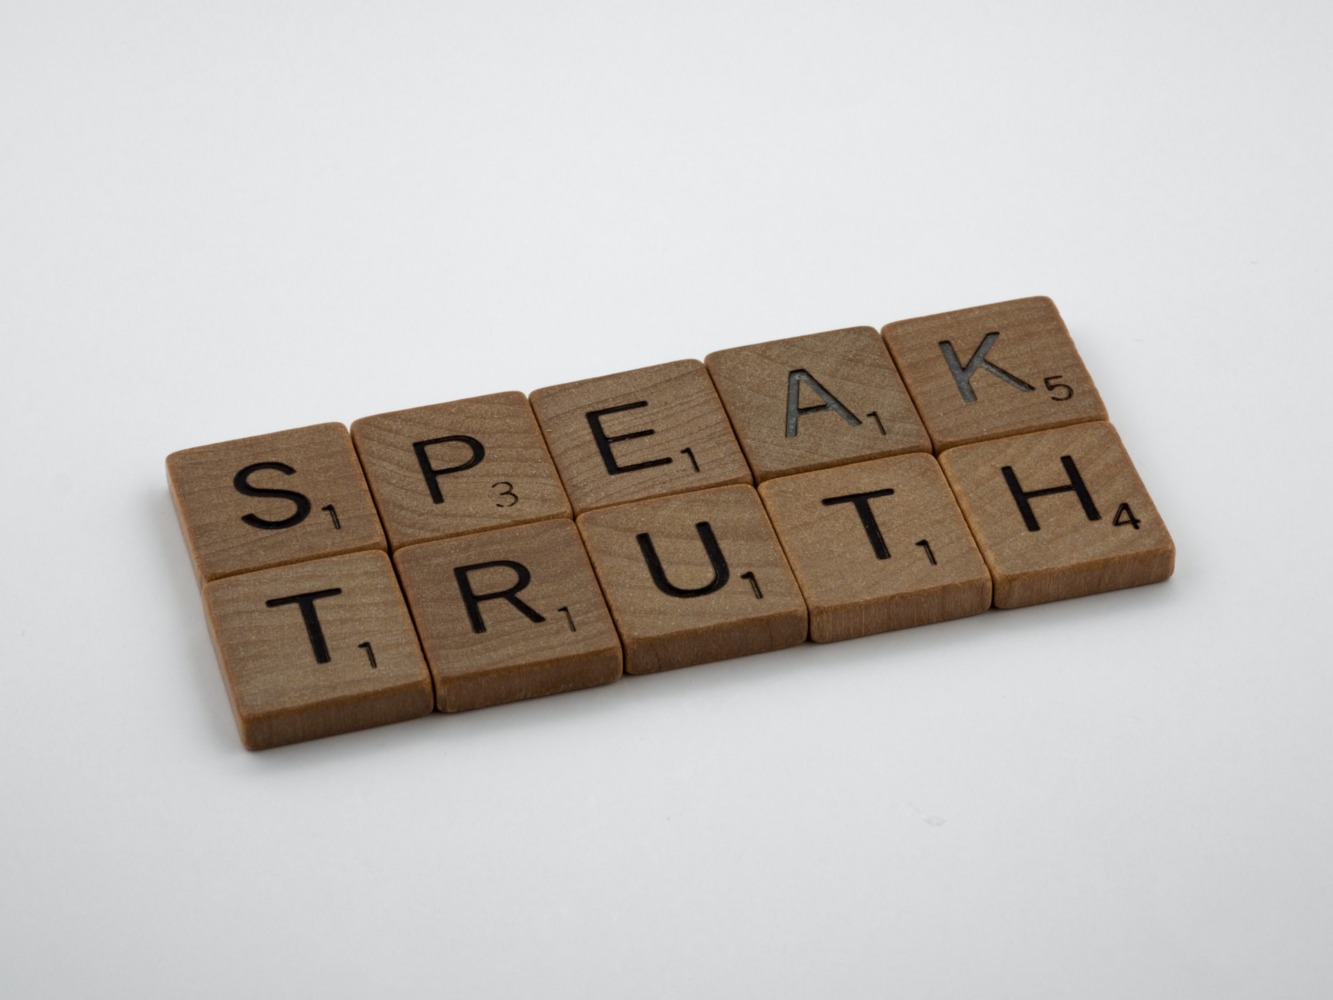 brown scrabble tiles spelling out 'speak truth'